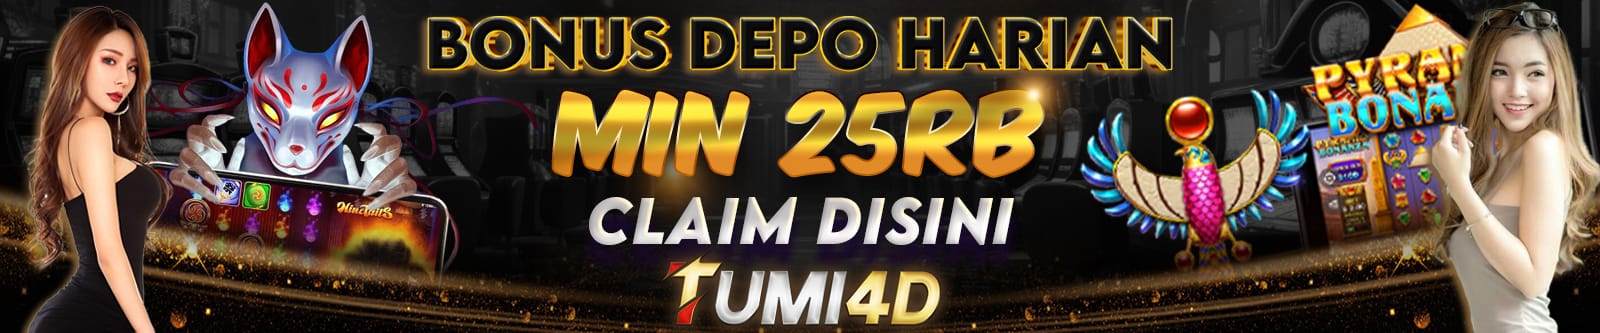 Tumi4d Bonua Deposit Harian Minimal 20rb